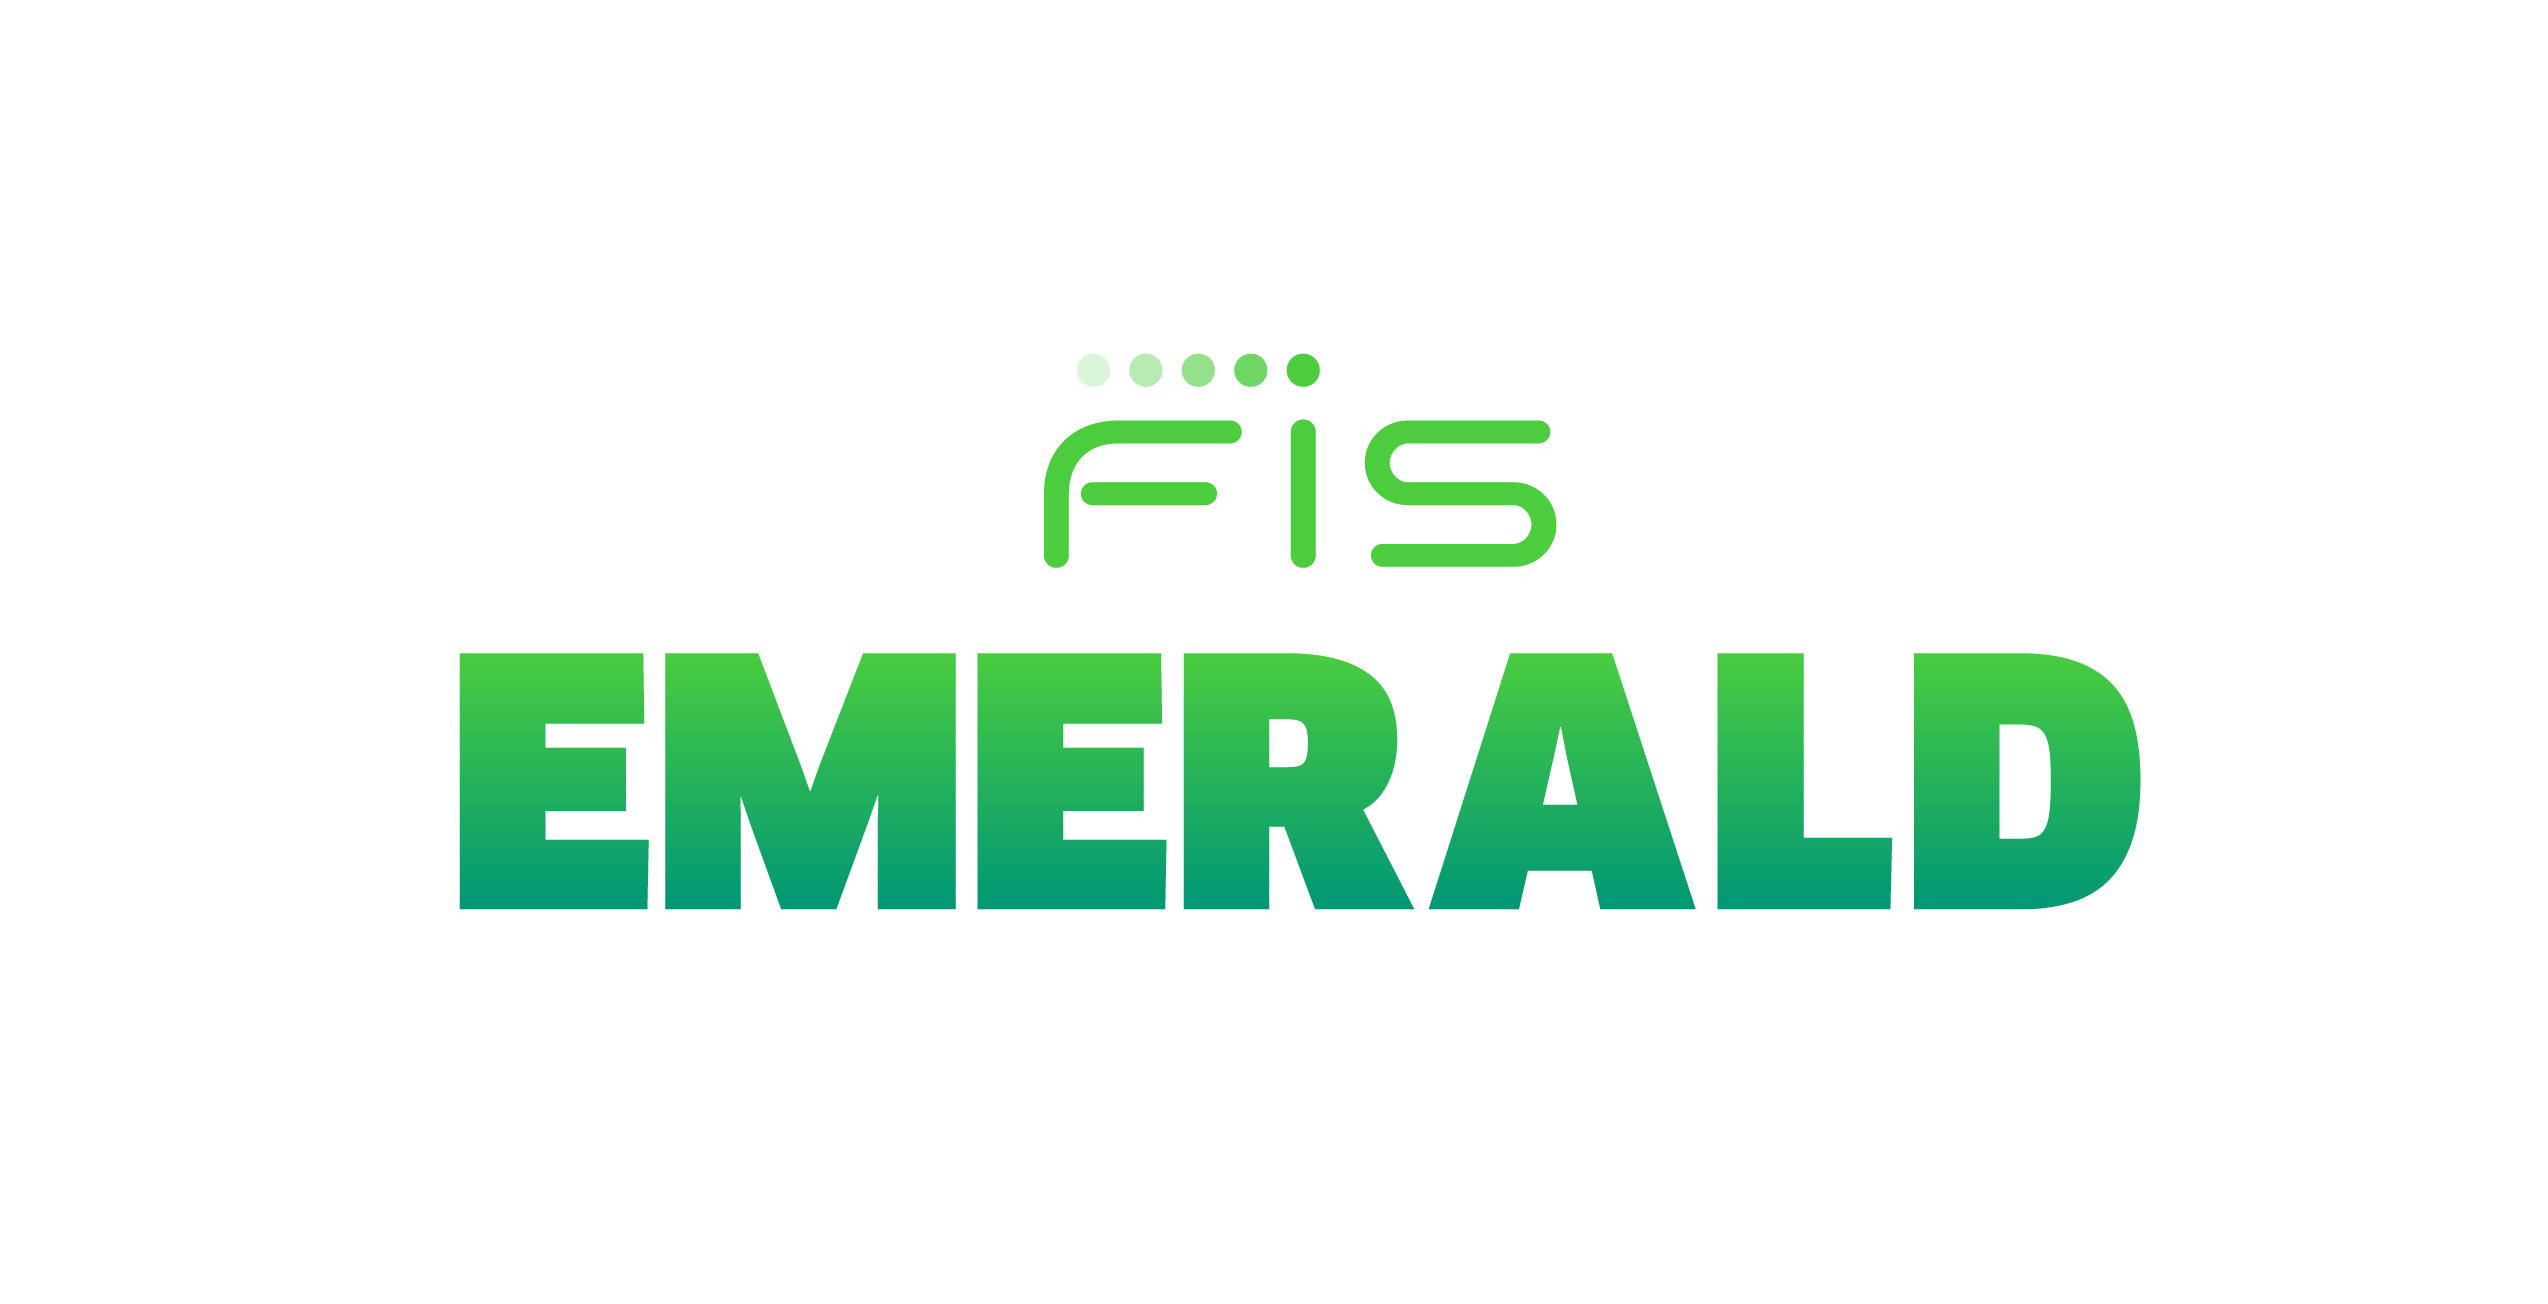 FIS Emerald 2023 logo